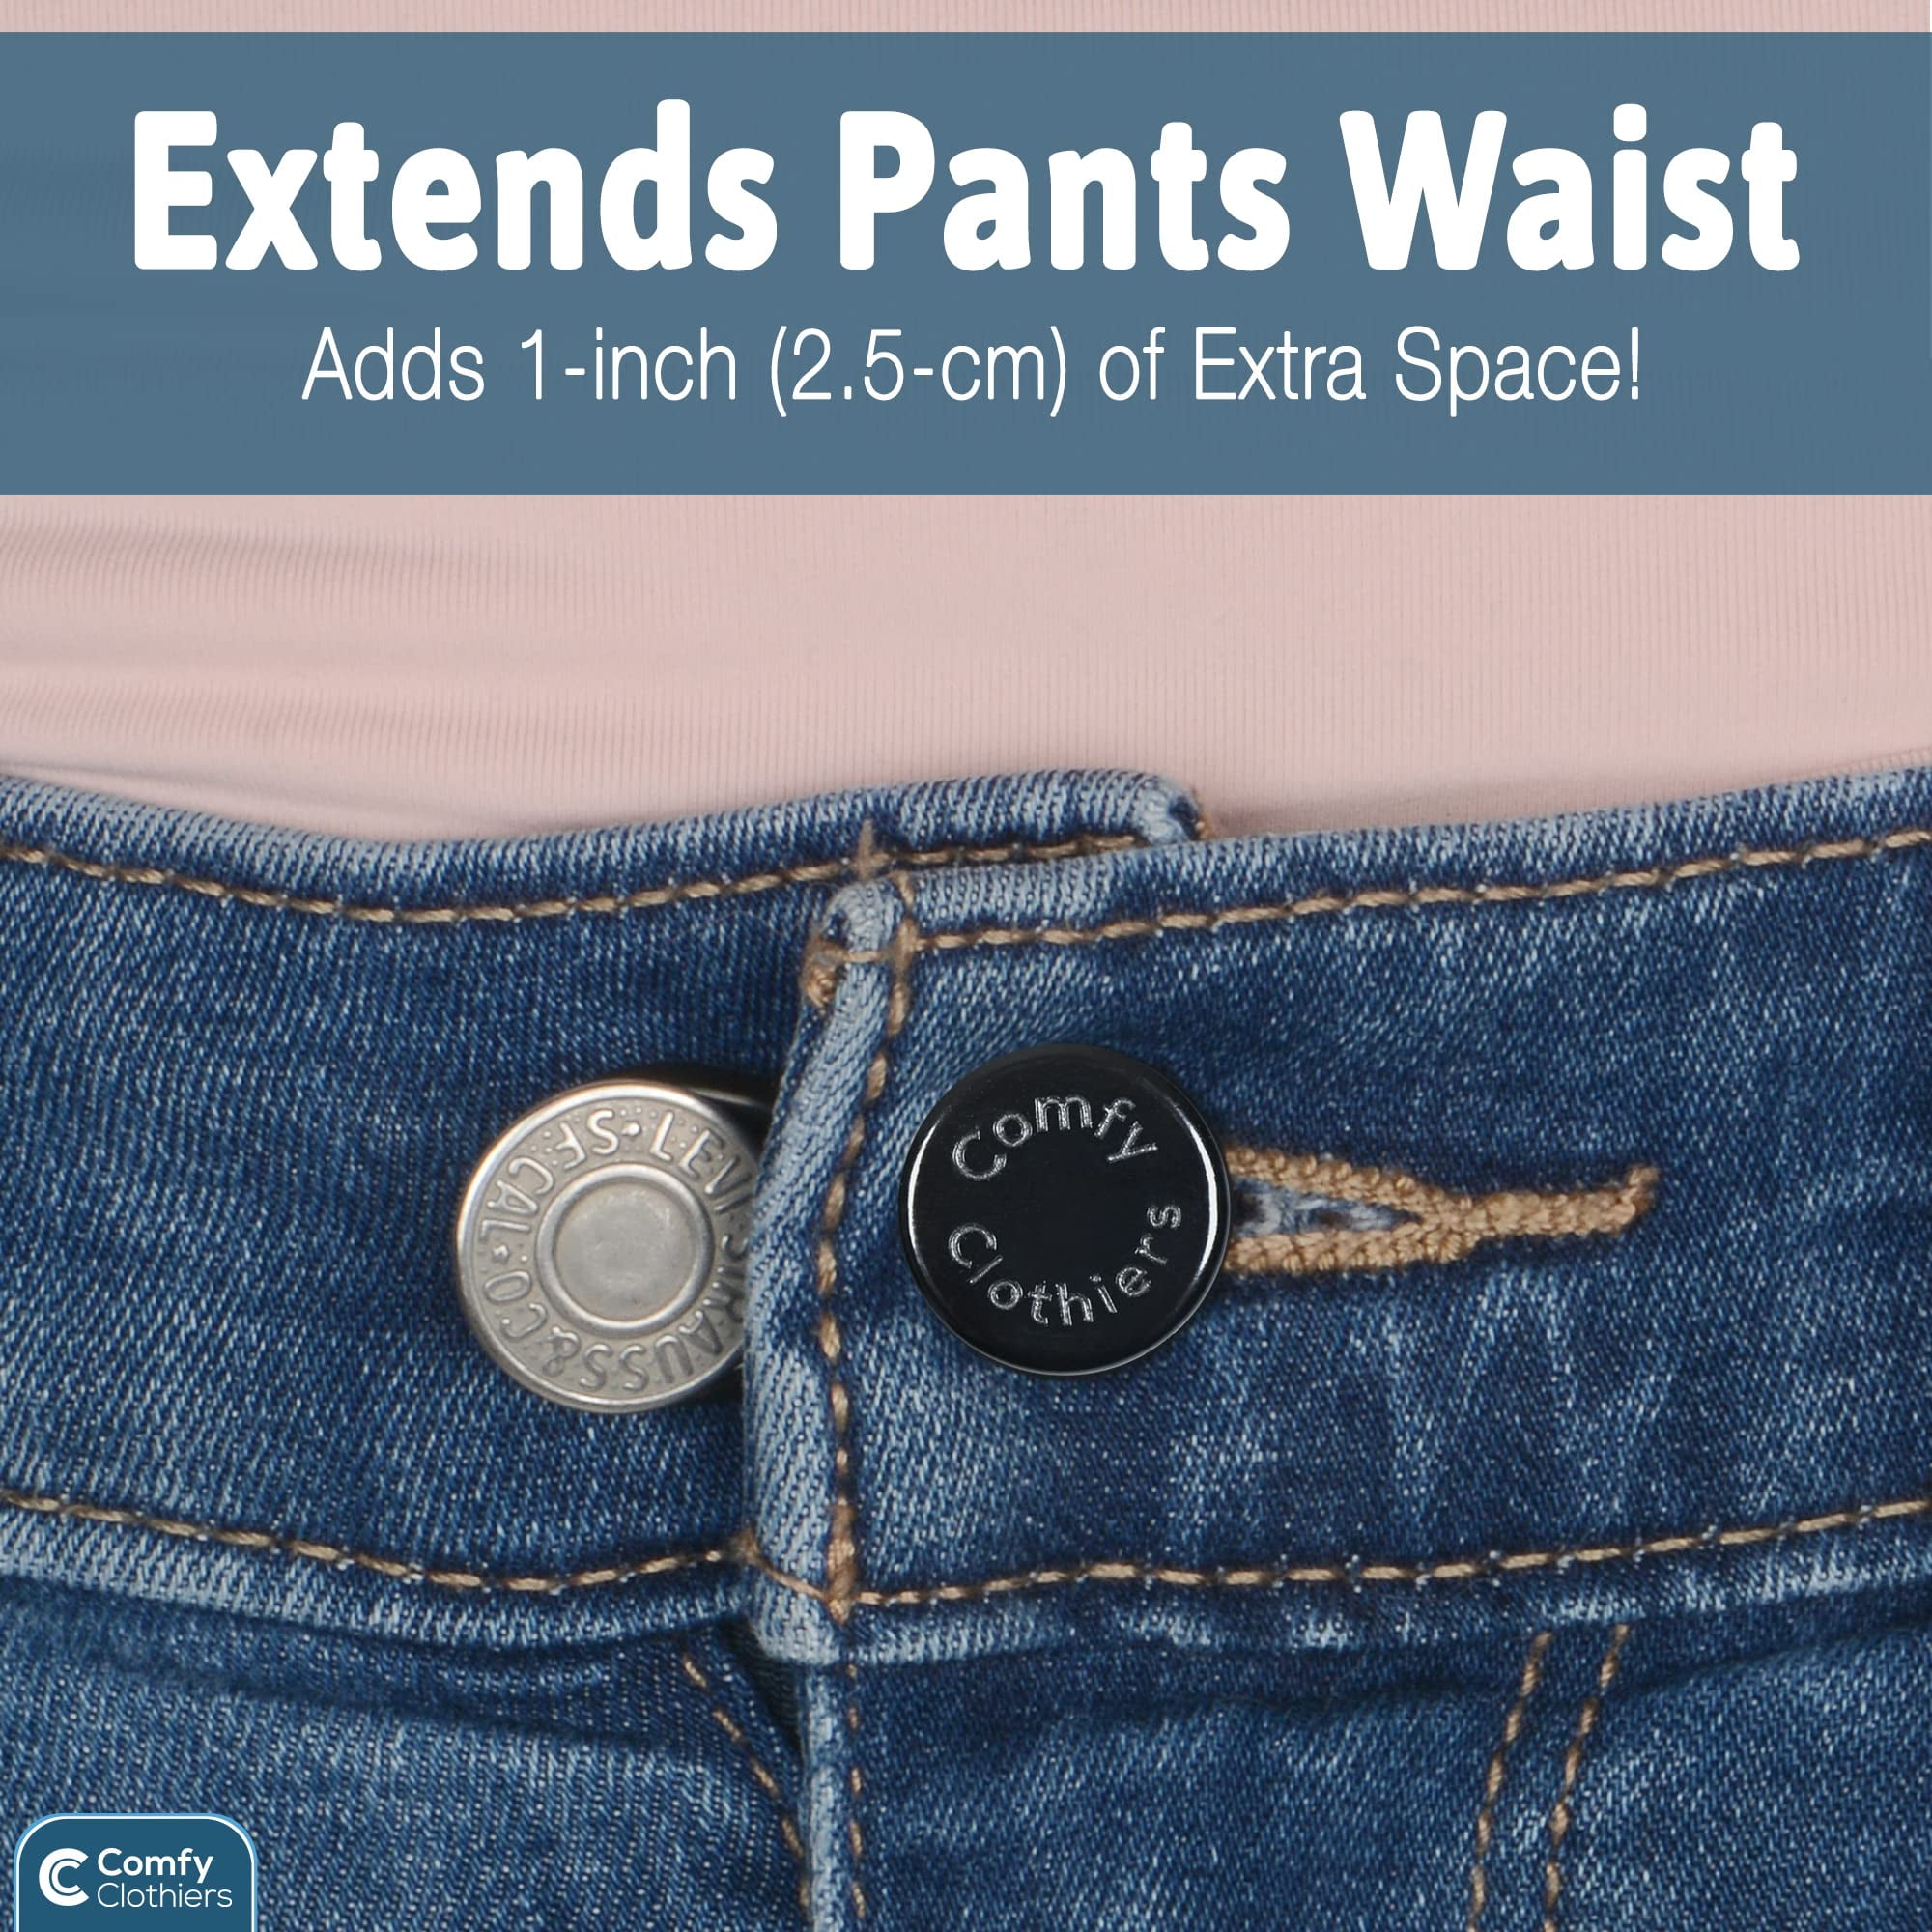 Comfy Clothiers Pants Button Extenders (10-Pack) Waist Extenders for Men & Women's Slacks, Pants, Shorts and Skirts